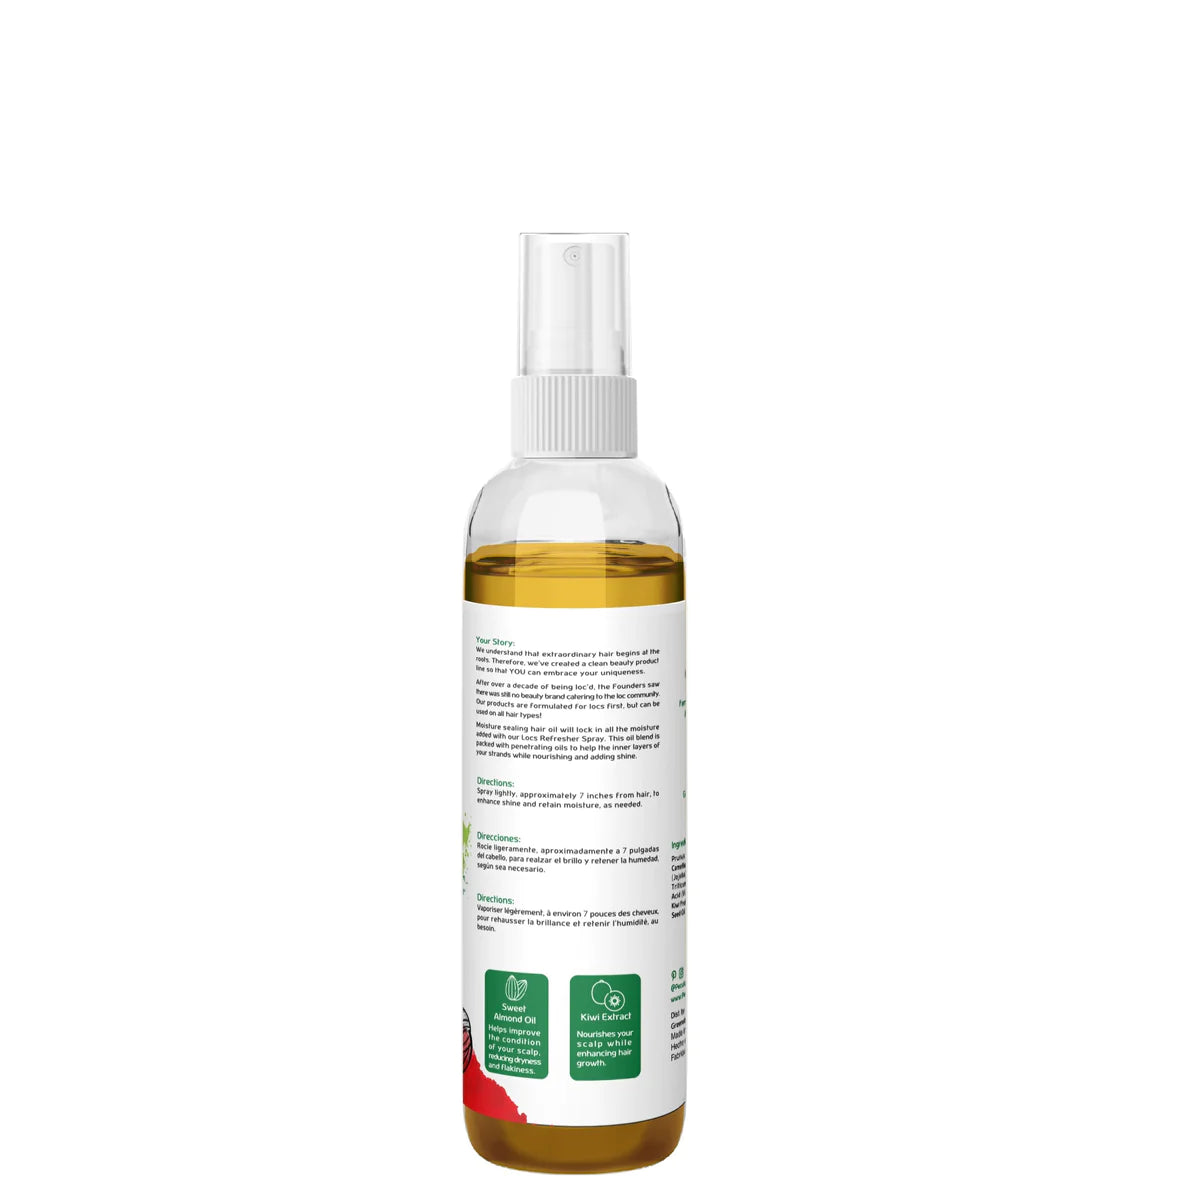 Vegan Locs Oil Spray (Pineapple Scent) | 4 oz